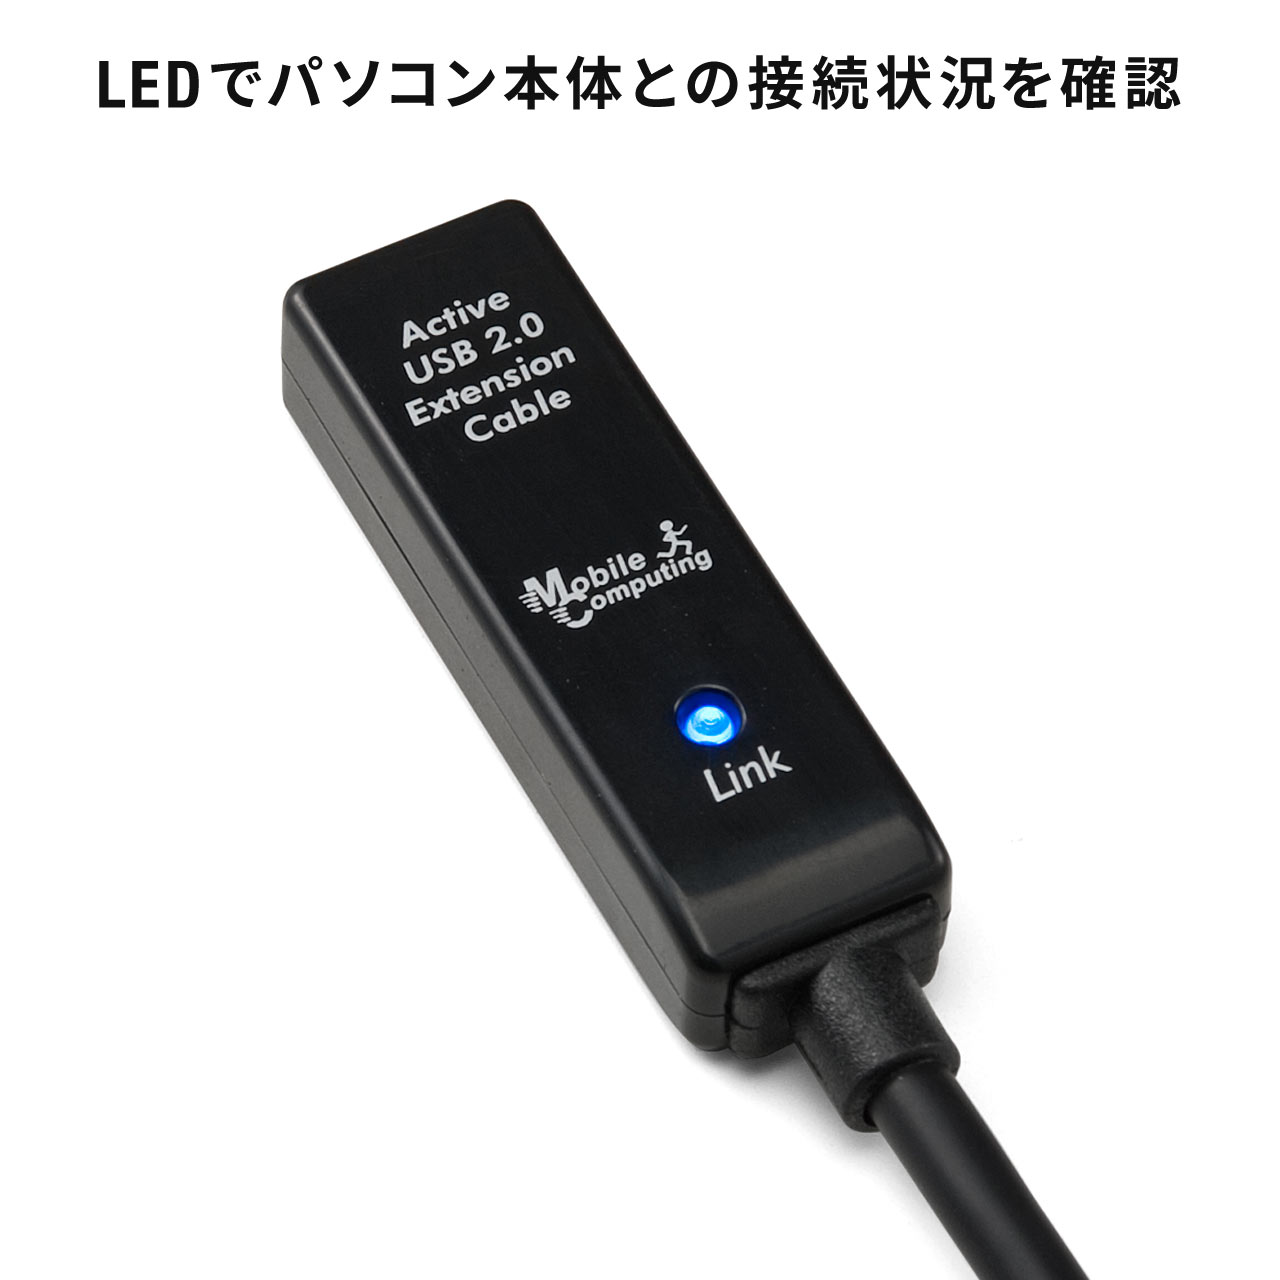 USBリピーターケーブル 10m USB2.0 ブラック USB延長ケーブル 500-USB005